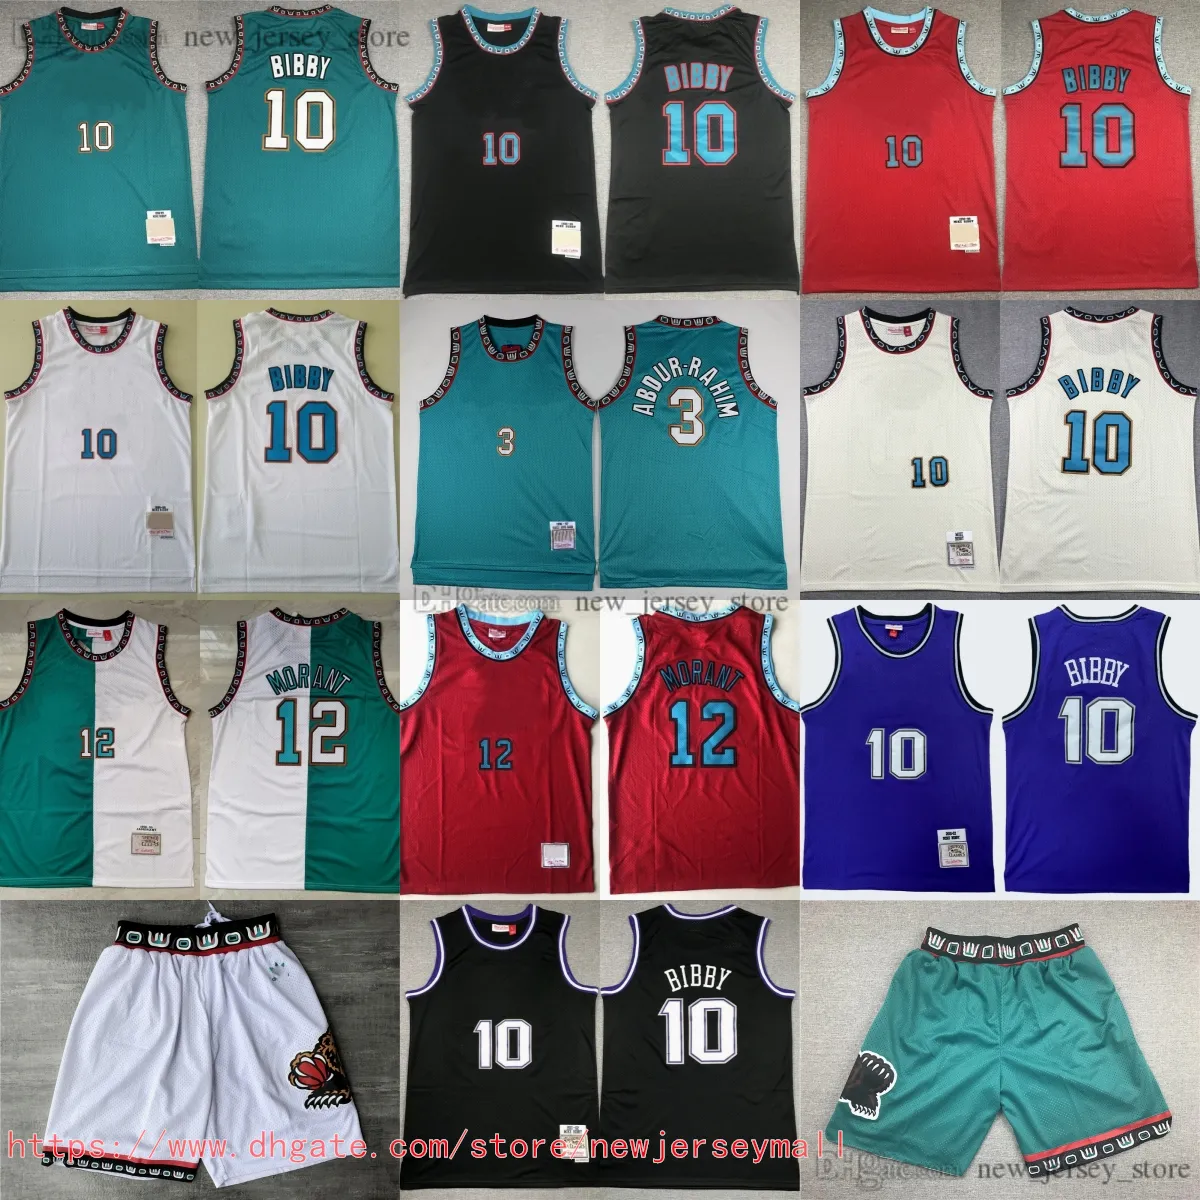 Classic Retro 1996-97 Basketball 3 Shareef Abdur-Rahim Jersey Throwback Classic 1998-99 Vintage 10 Mike Bibby Jersey Short 12 Ja Morant Breatble Sports Shirts